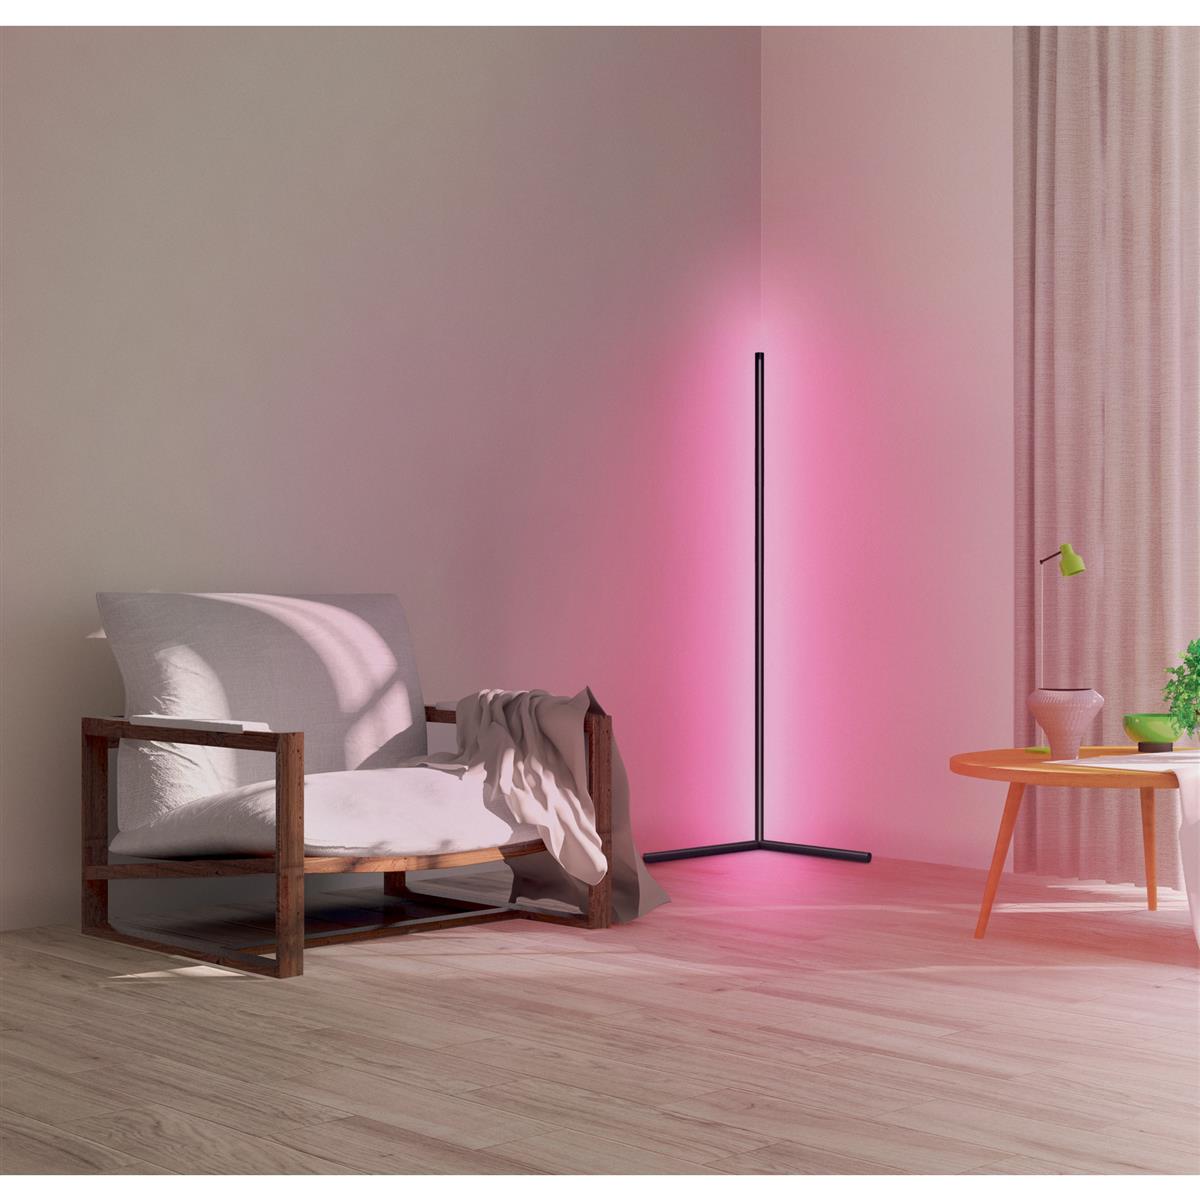 Ledvance SMART+WiFi 14-W-LED-Stehleuchte FLOOR CORNER, Aluminium, 200 lm, Tunable White, RGB,140 cm